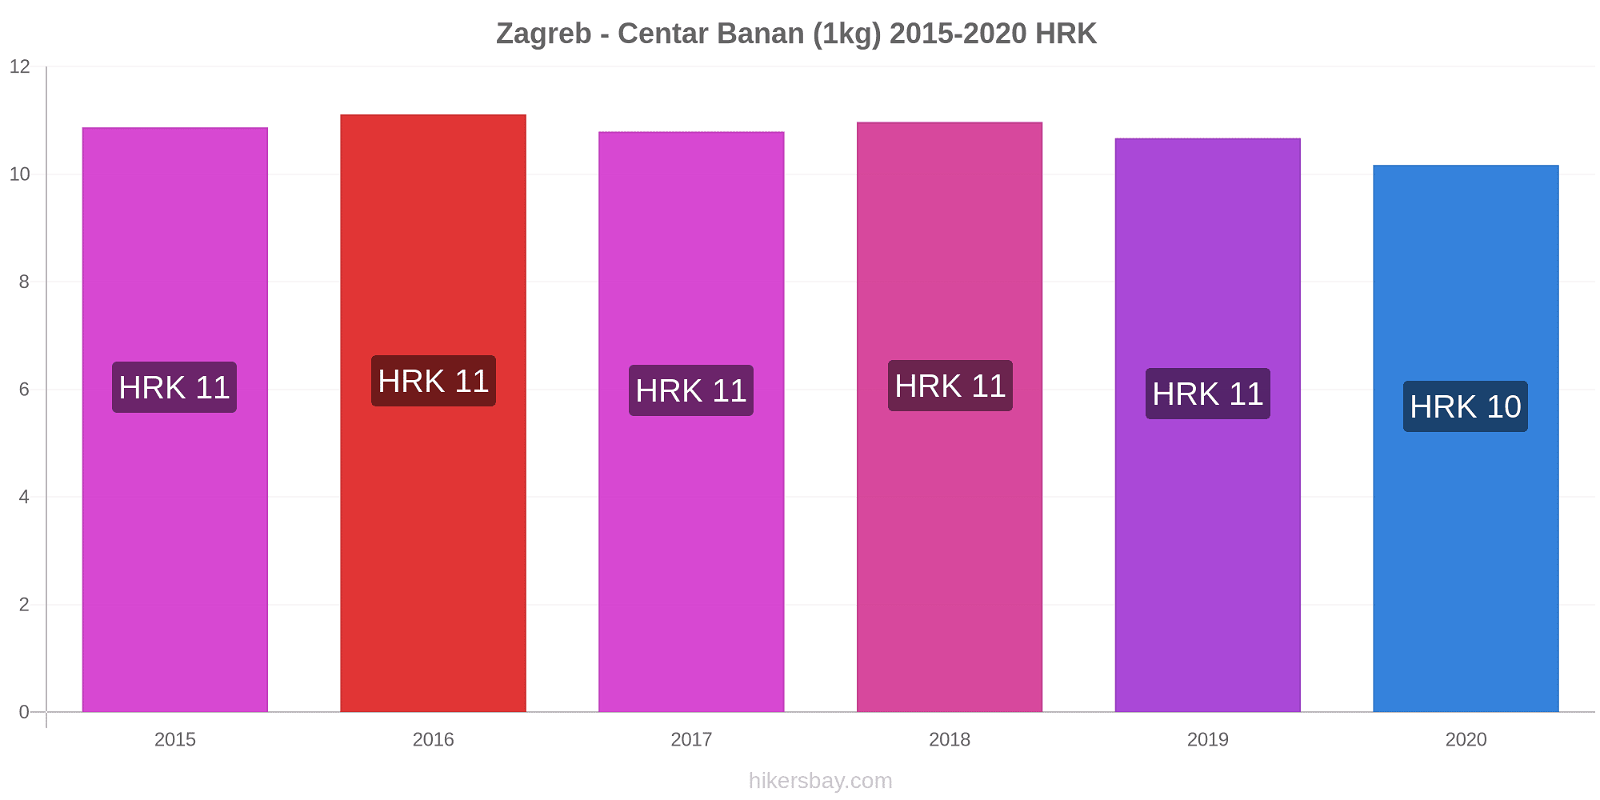 Zagreb - Centar prisændringer Banan (1kg) hikersbay.com